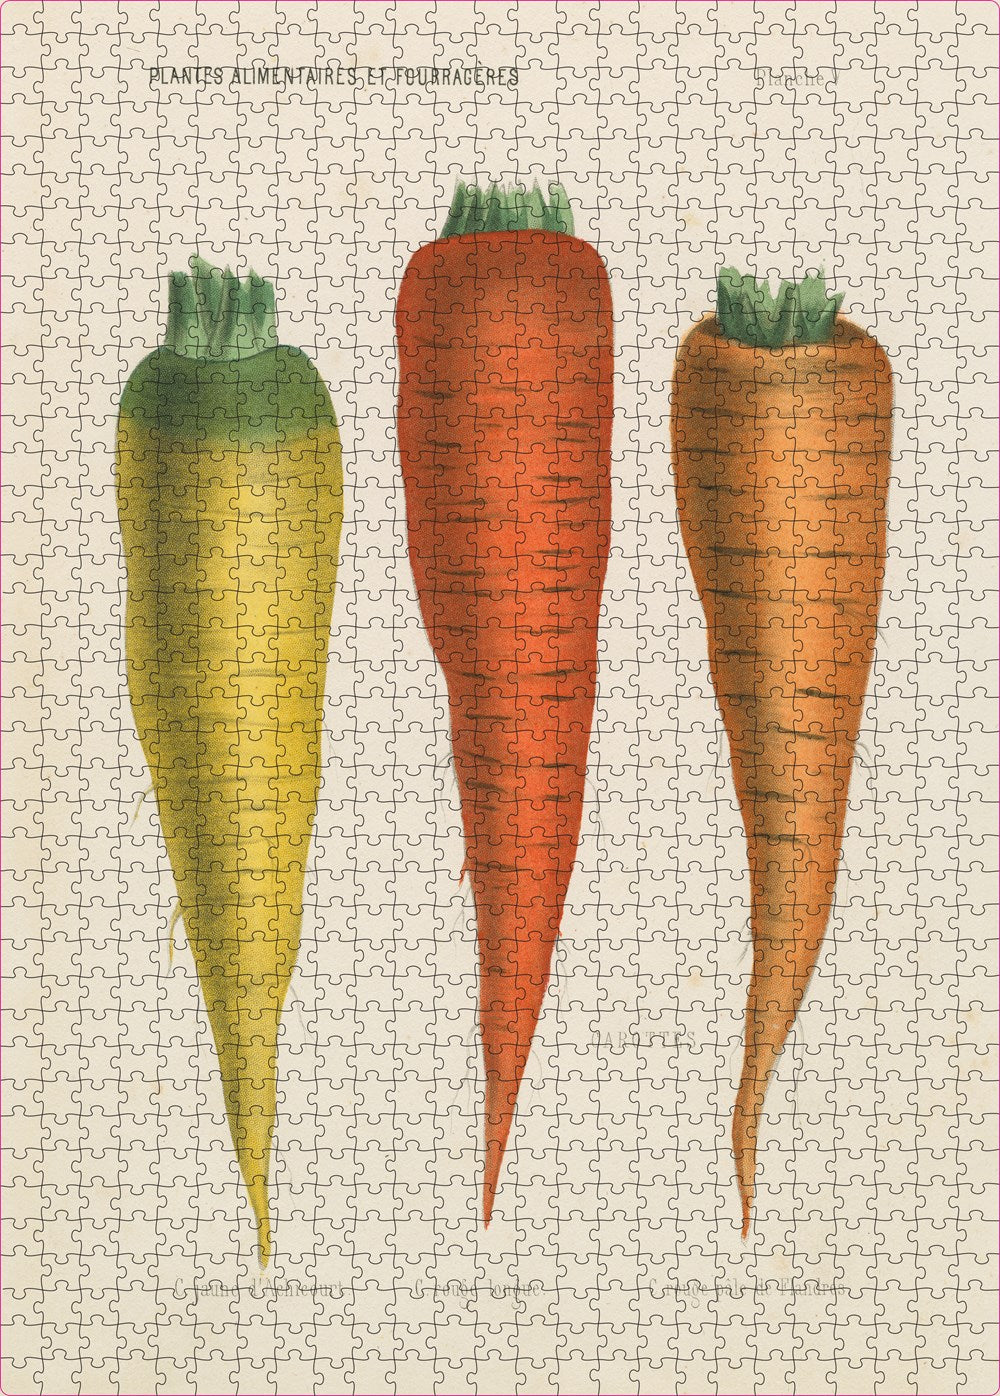 Three Carrots - John Derian - 1,000 Pieces